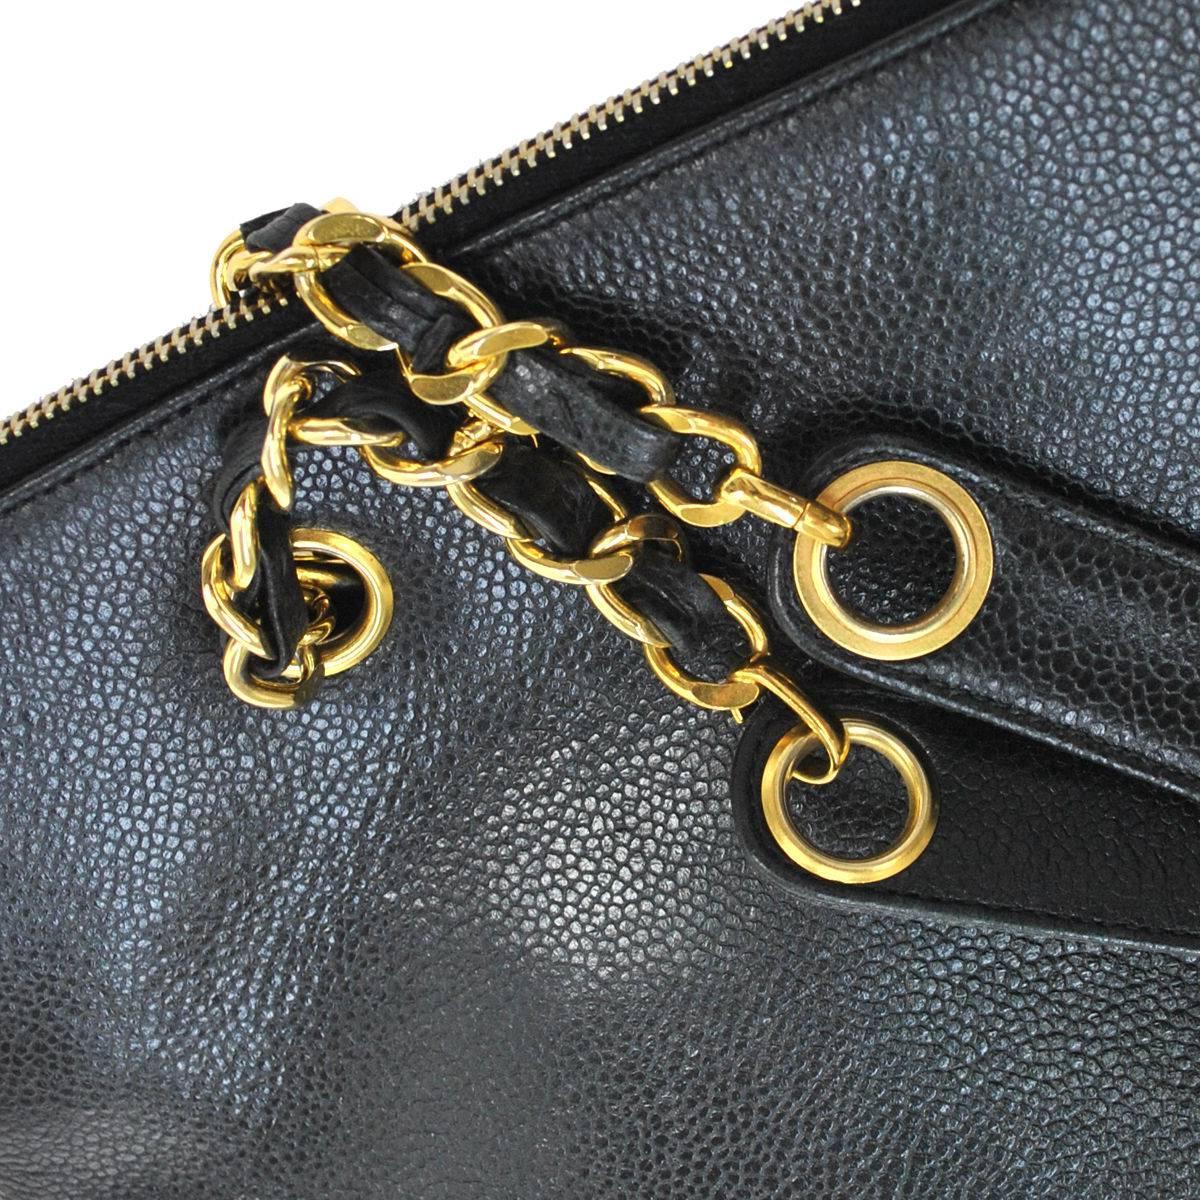 Chanel Vintage Caviar Carryall Shopper Weekender Travel Shoulder Bag  

Caviar
Gold tone hardware
Zipper closure
Made in Italy
Shoulder strap drop 14